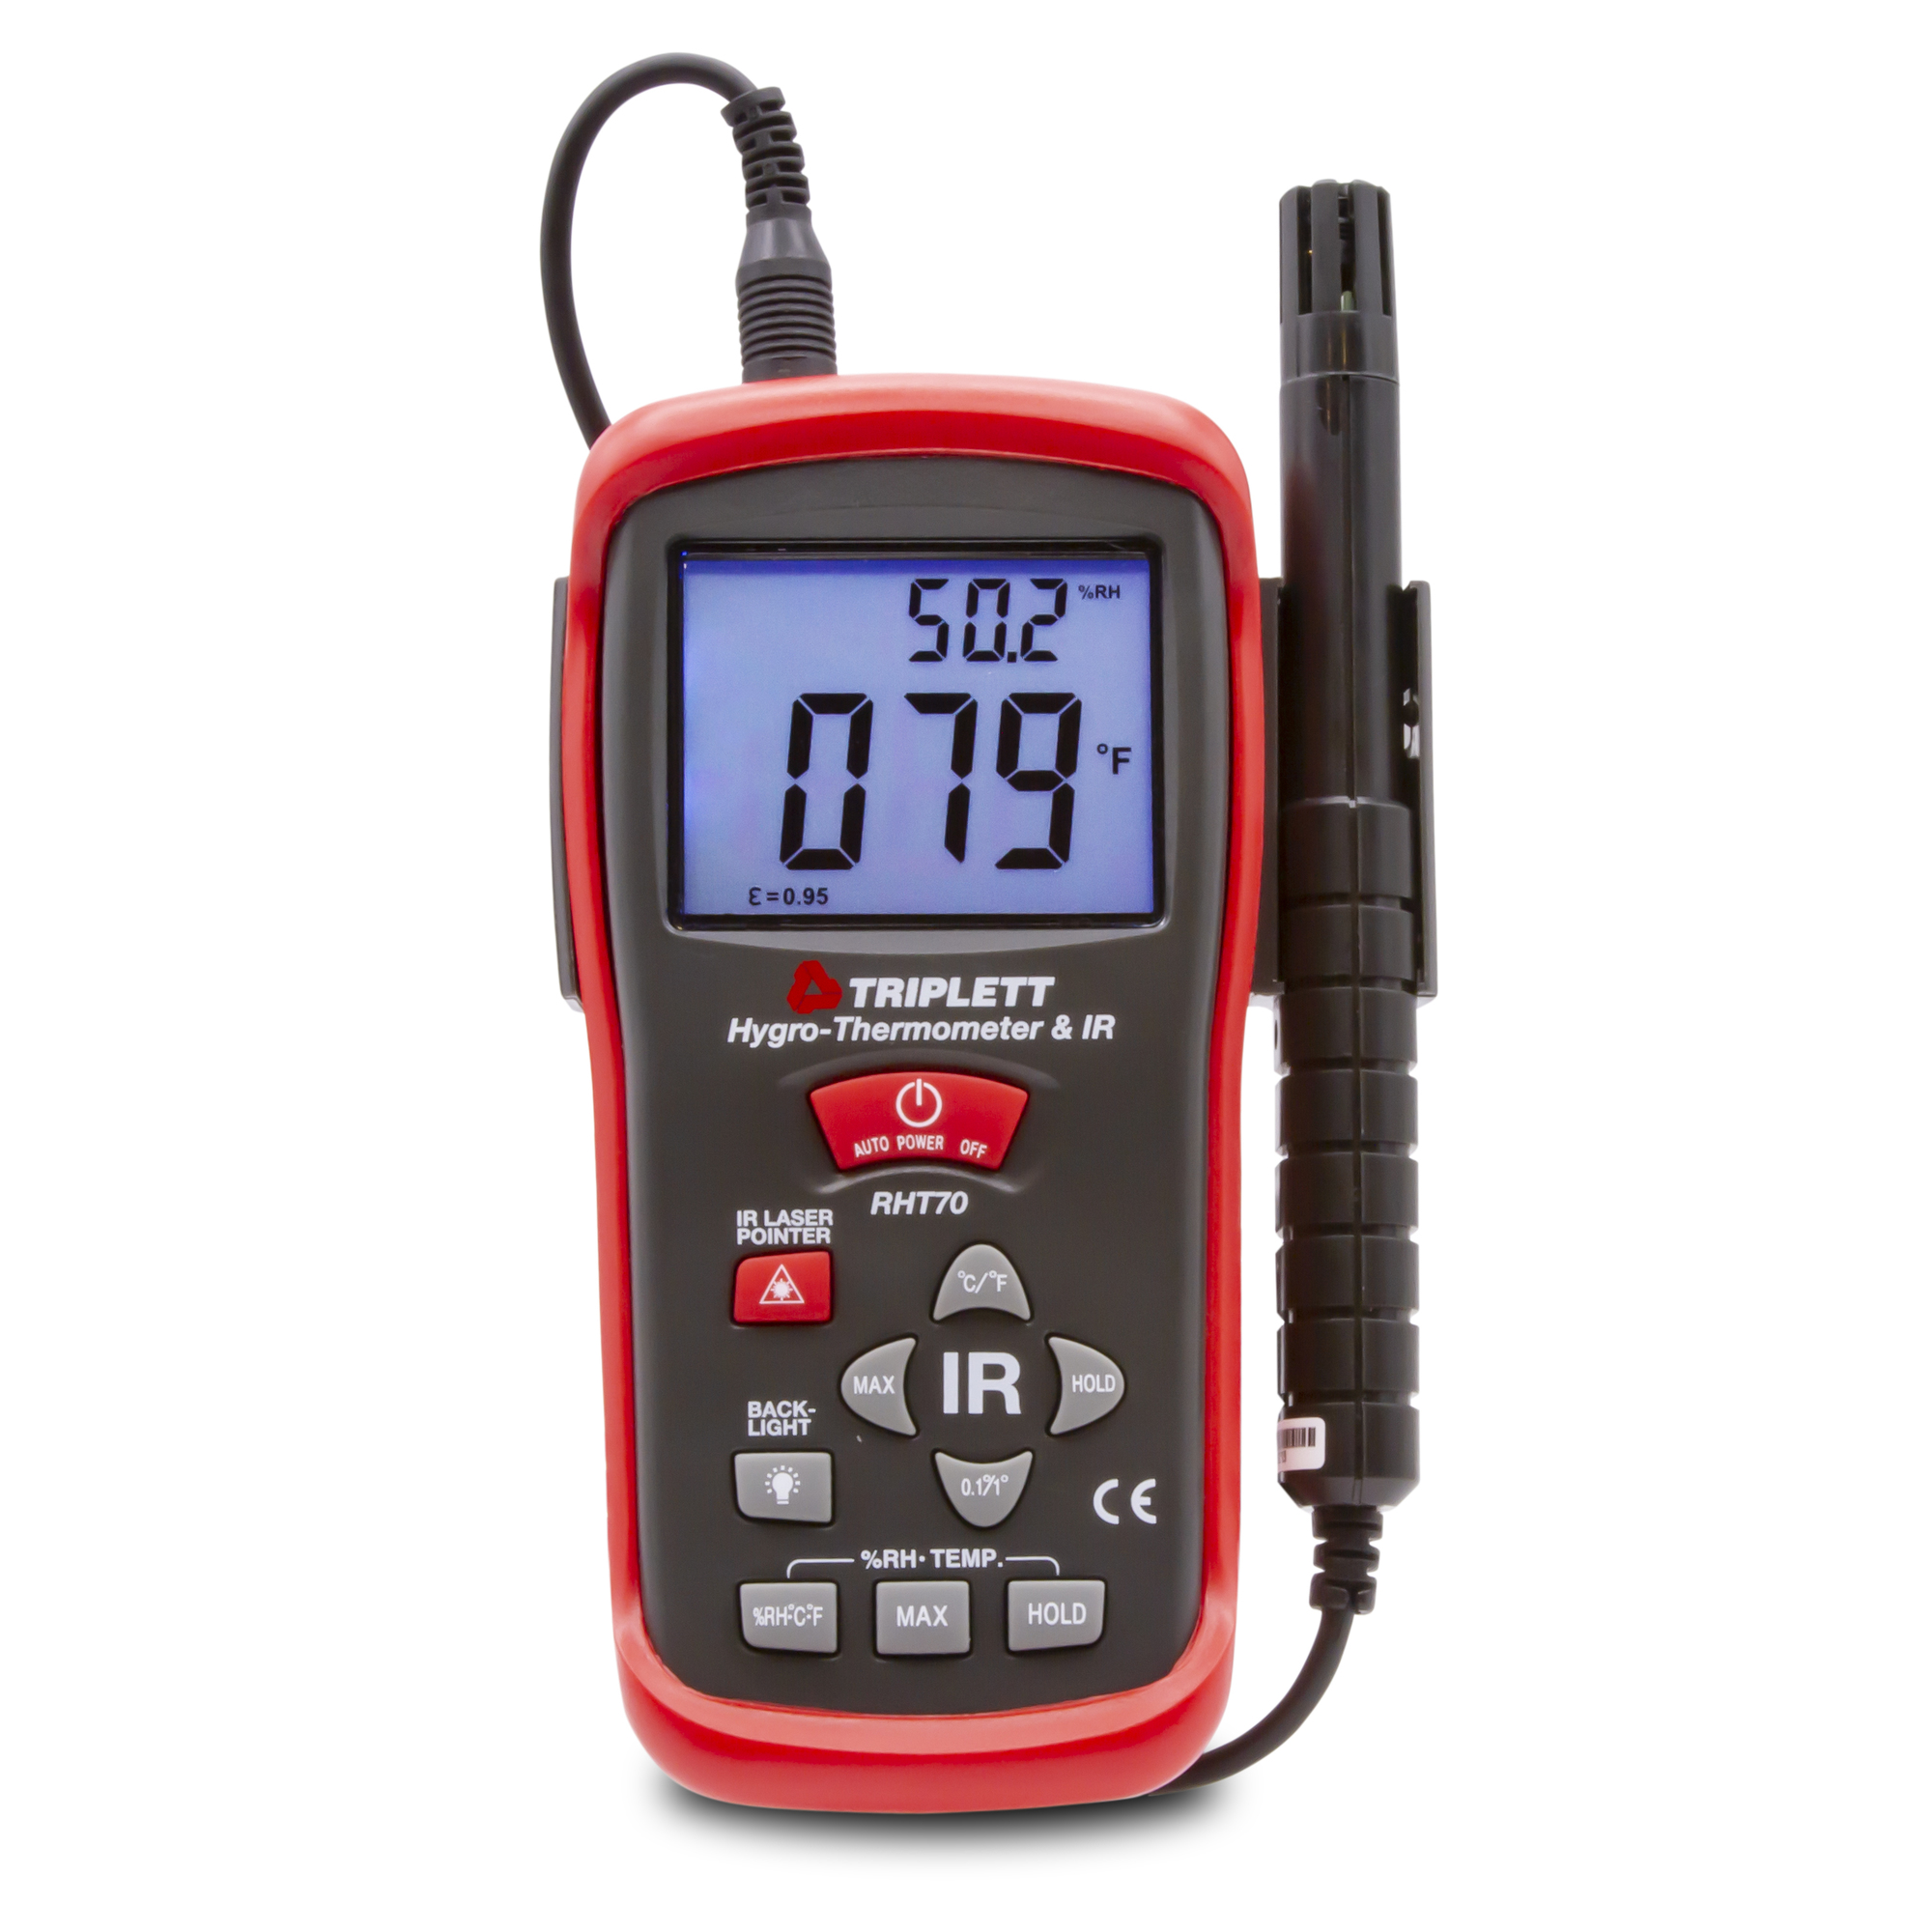 Triplett, Hygro-Thermometer + Infrared Thermometer, Model RHT70